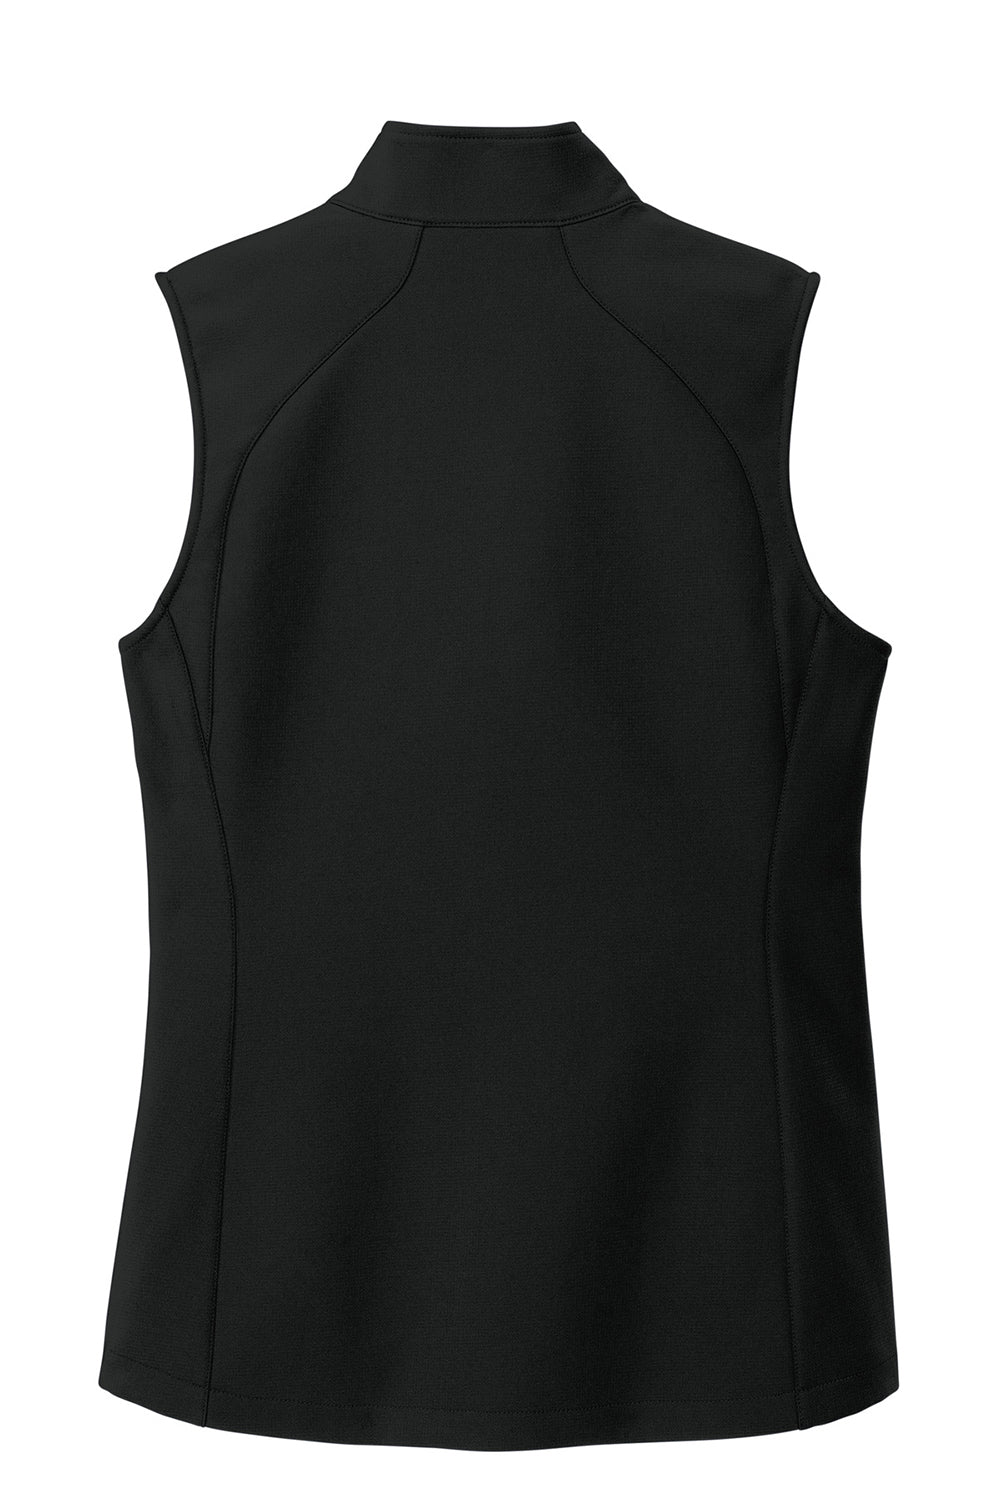 Eddie Bauer EB547 Womens Stretch Soft Shell Full Zip Vest Deep Black Flat Back